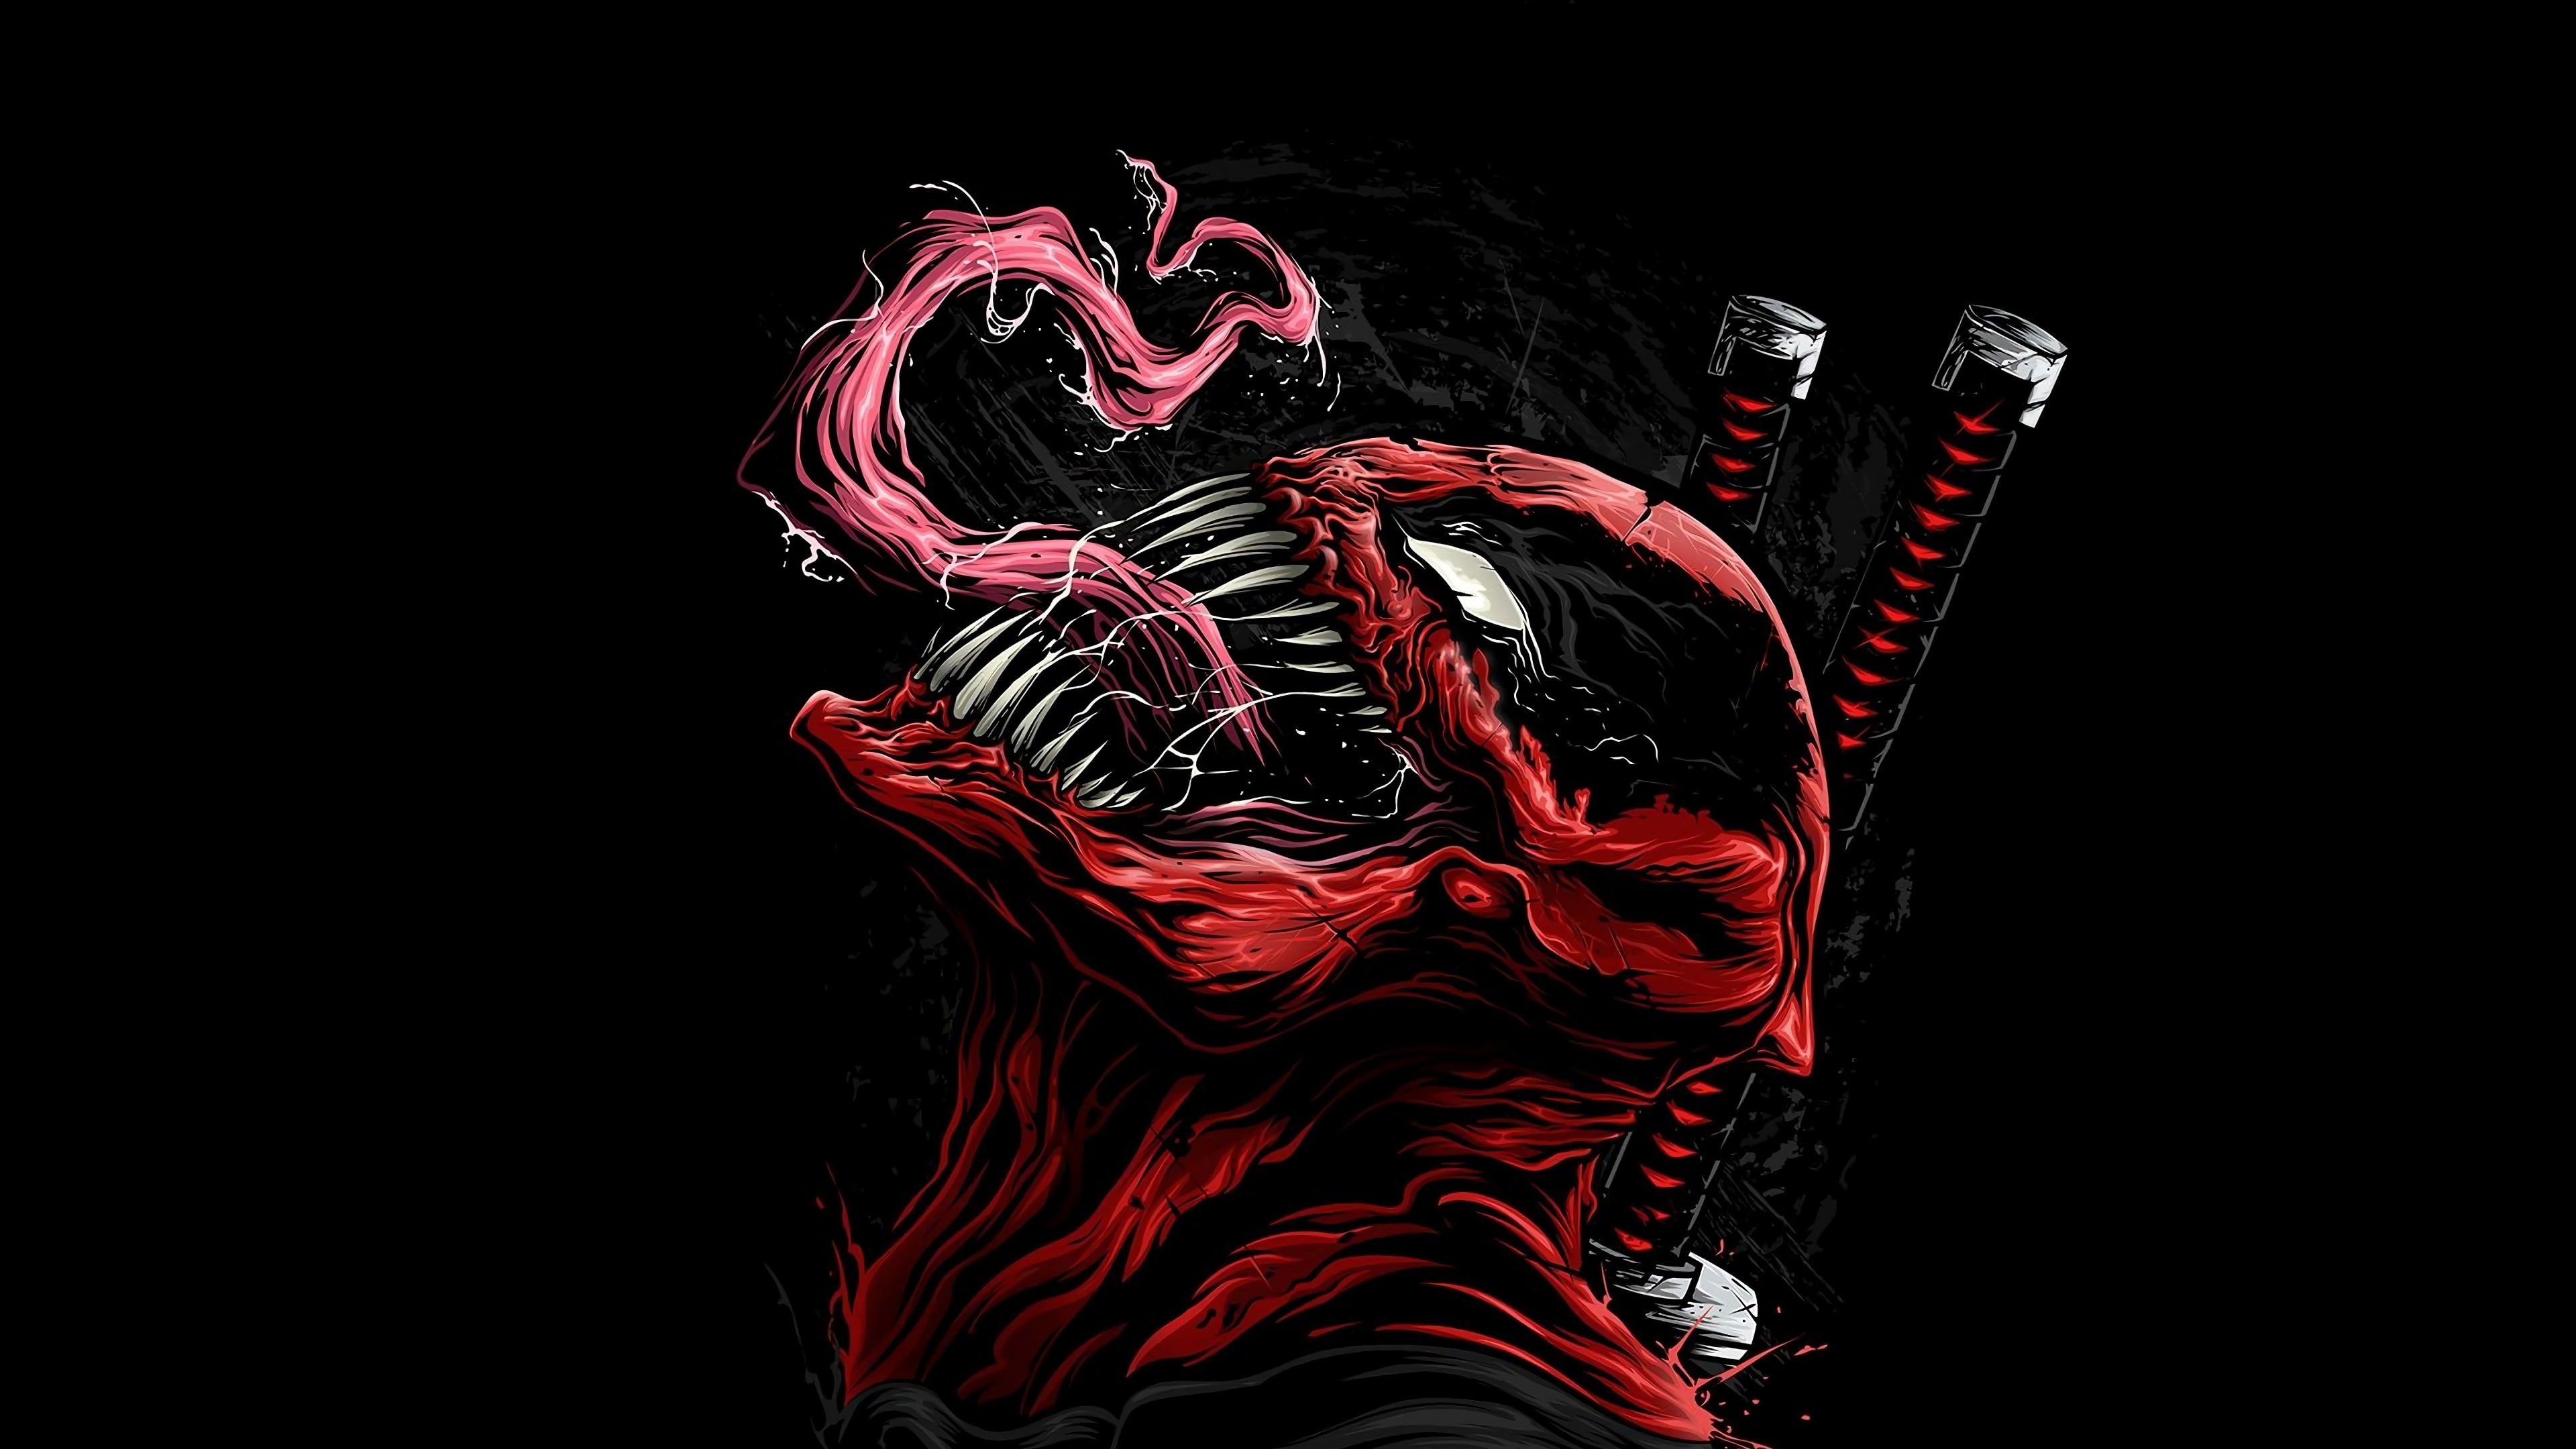 Venom #artwork #Deadpool K #wallpaper #hdwallpaper #desktop. Deadpool wallpaper, Black wallpaper, Marvel wallpaper